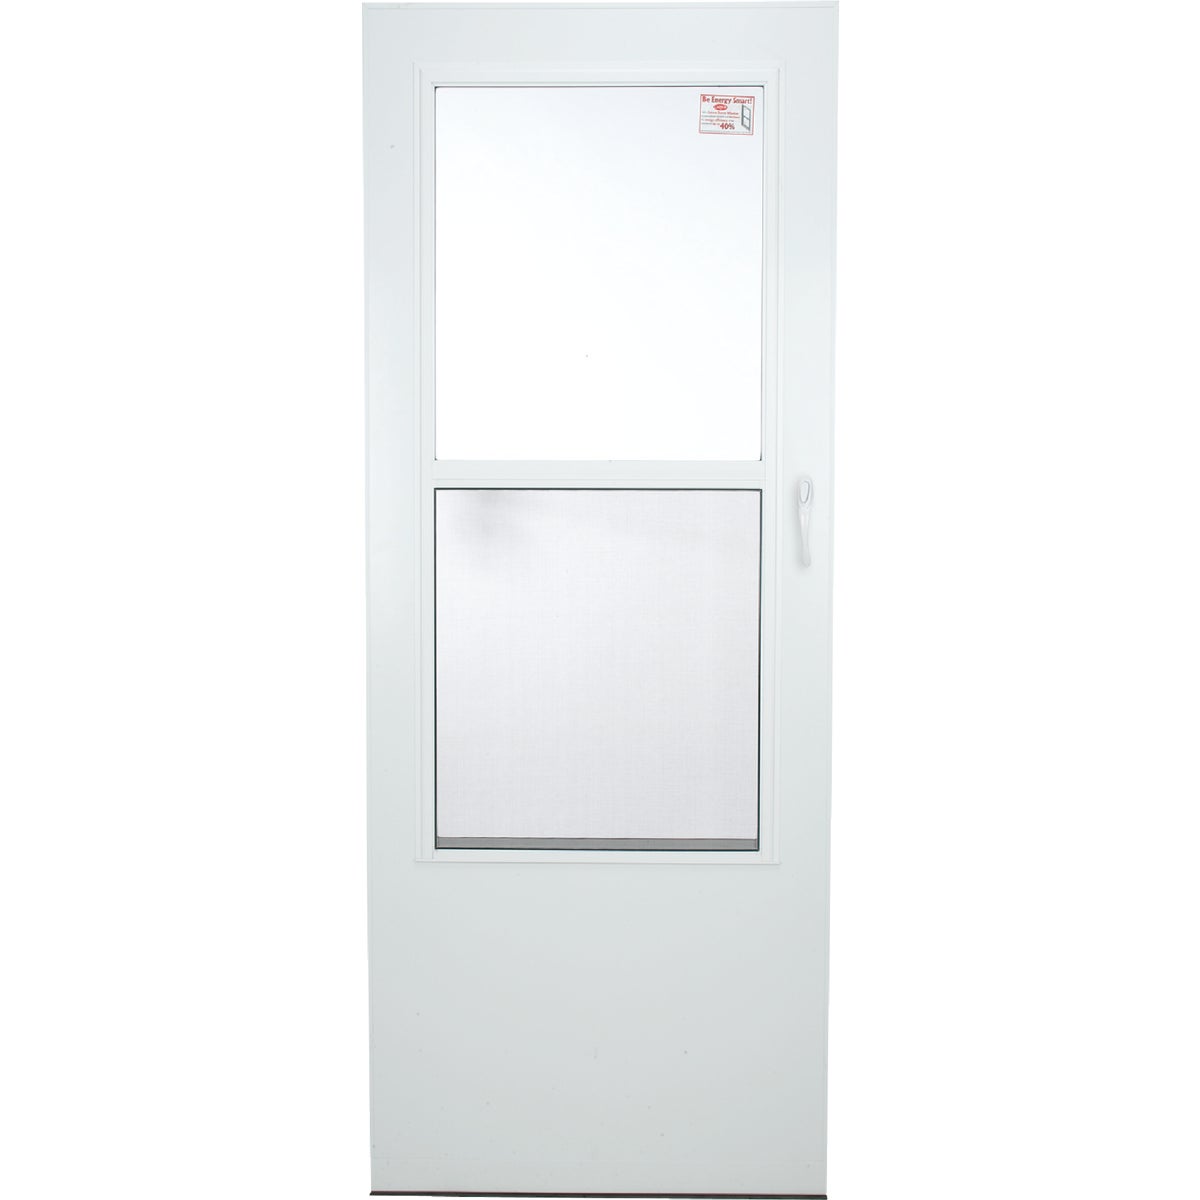 Item 160121, 1-inch reversible, maintenance-free, aluminum clad storm door with solid 